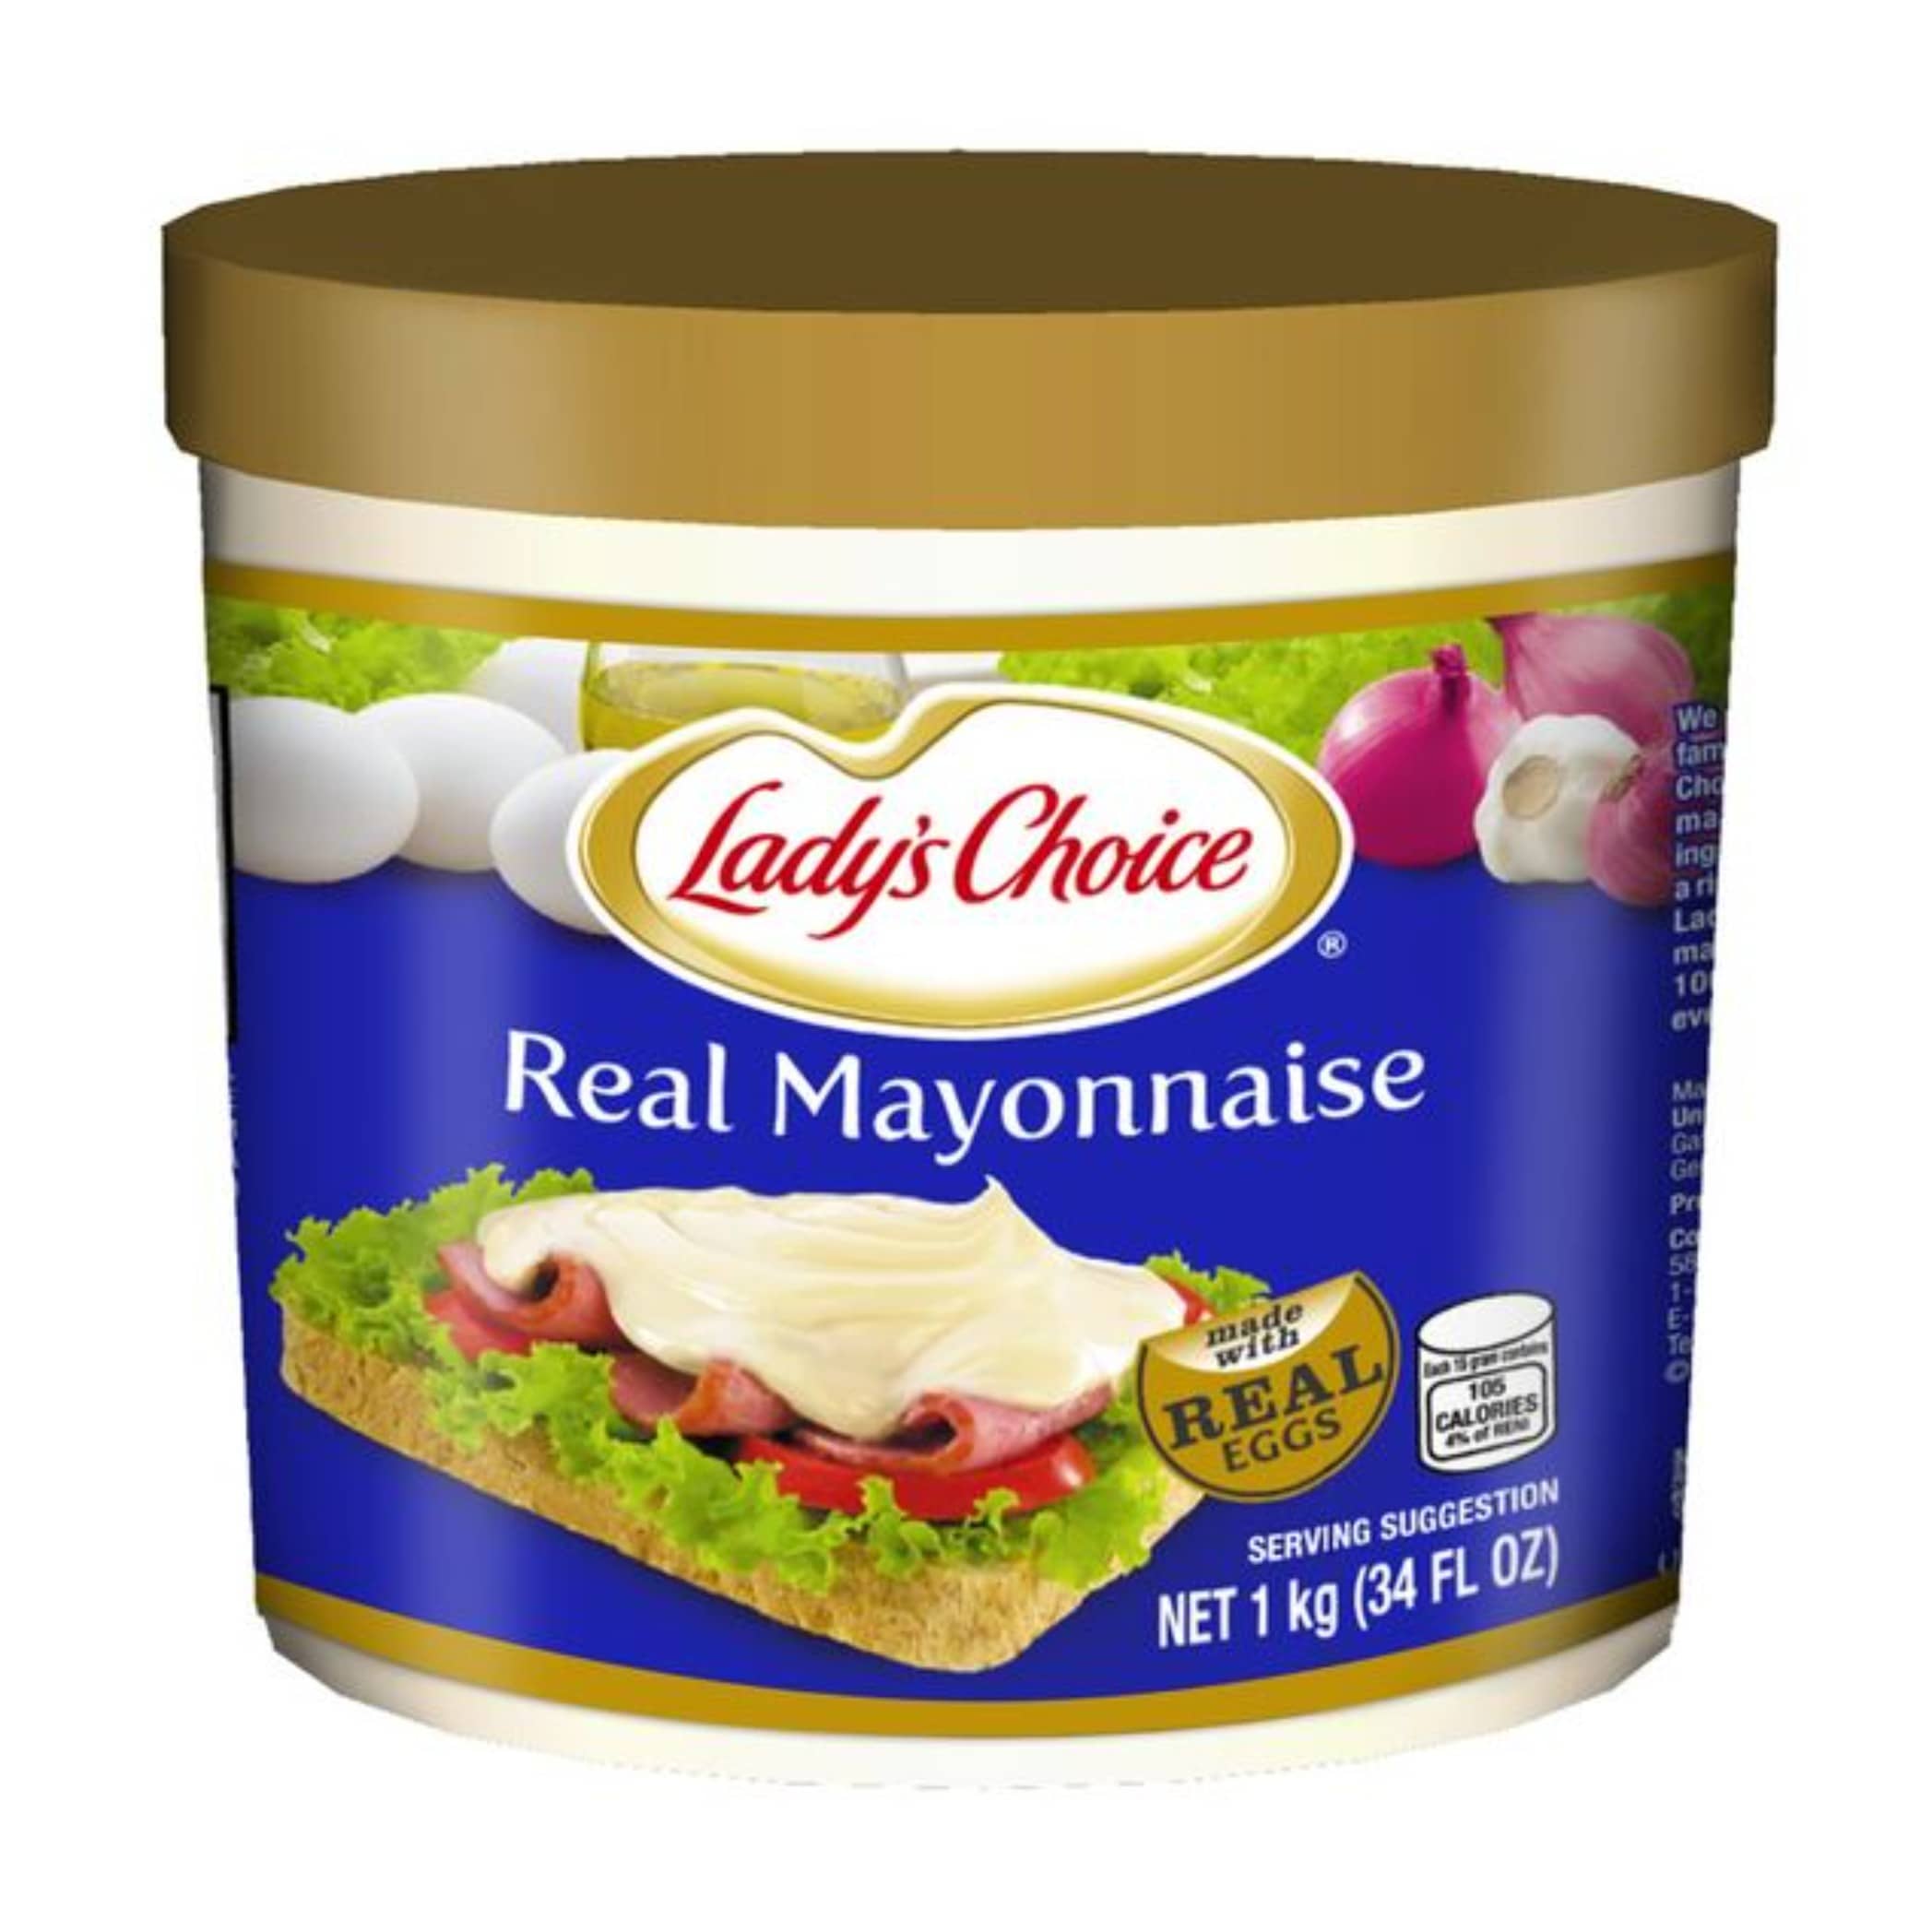 Ladys Choice Rglr Mayonaise 1kg 1 